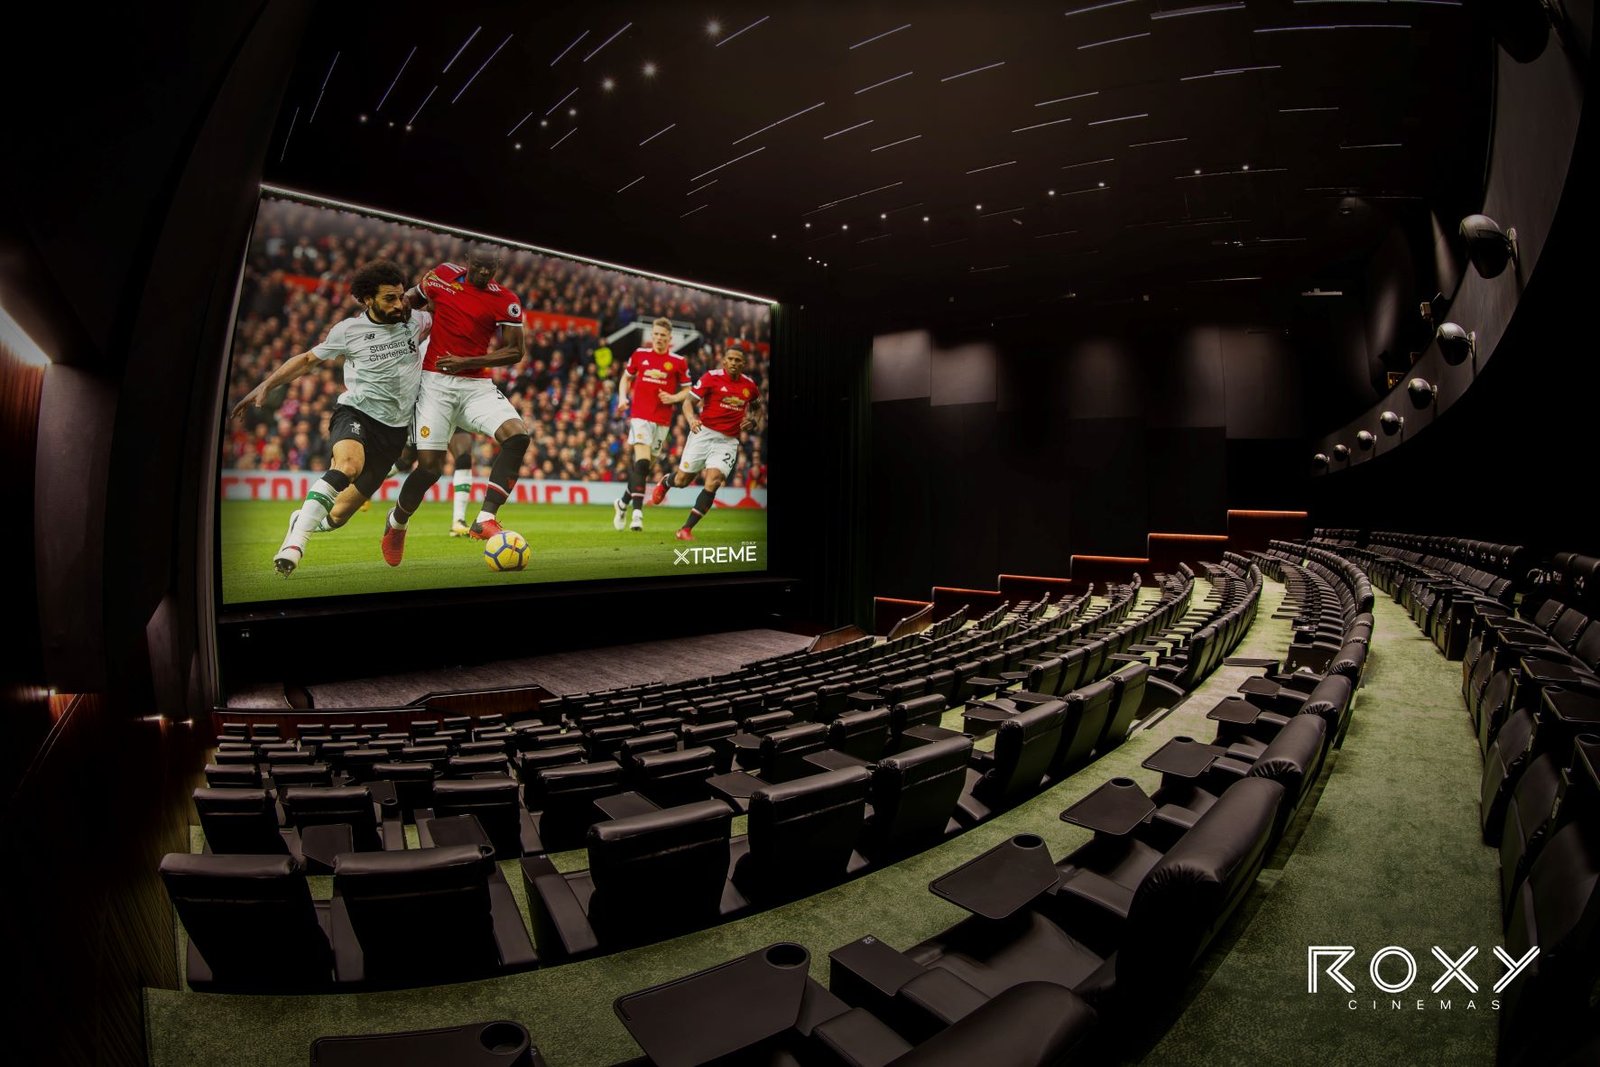 Roxy Cinemas Brings the FIFA World Cup Qatar 2022TM to the Big Screen